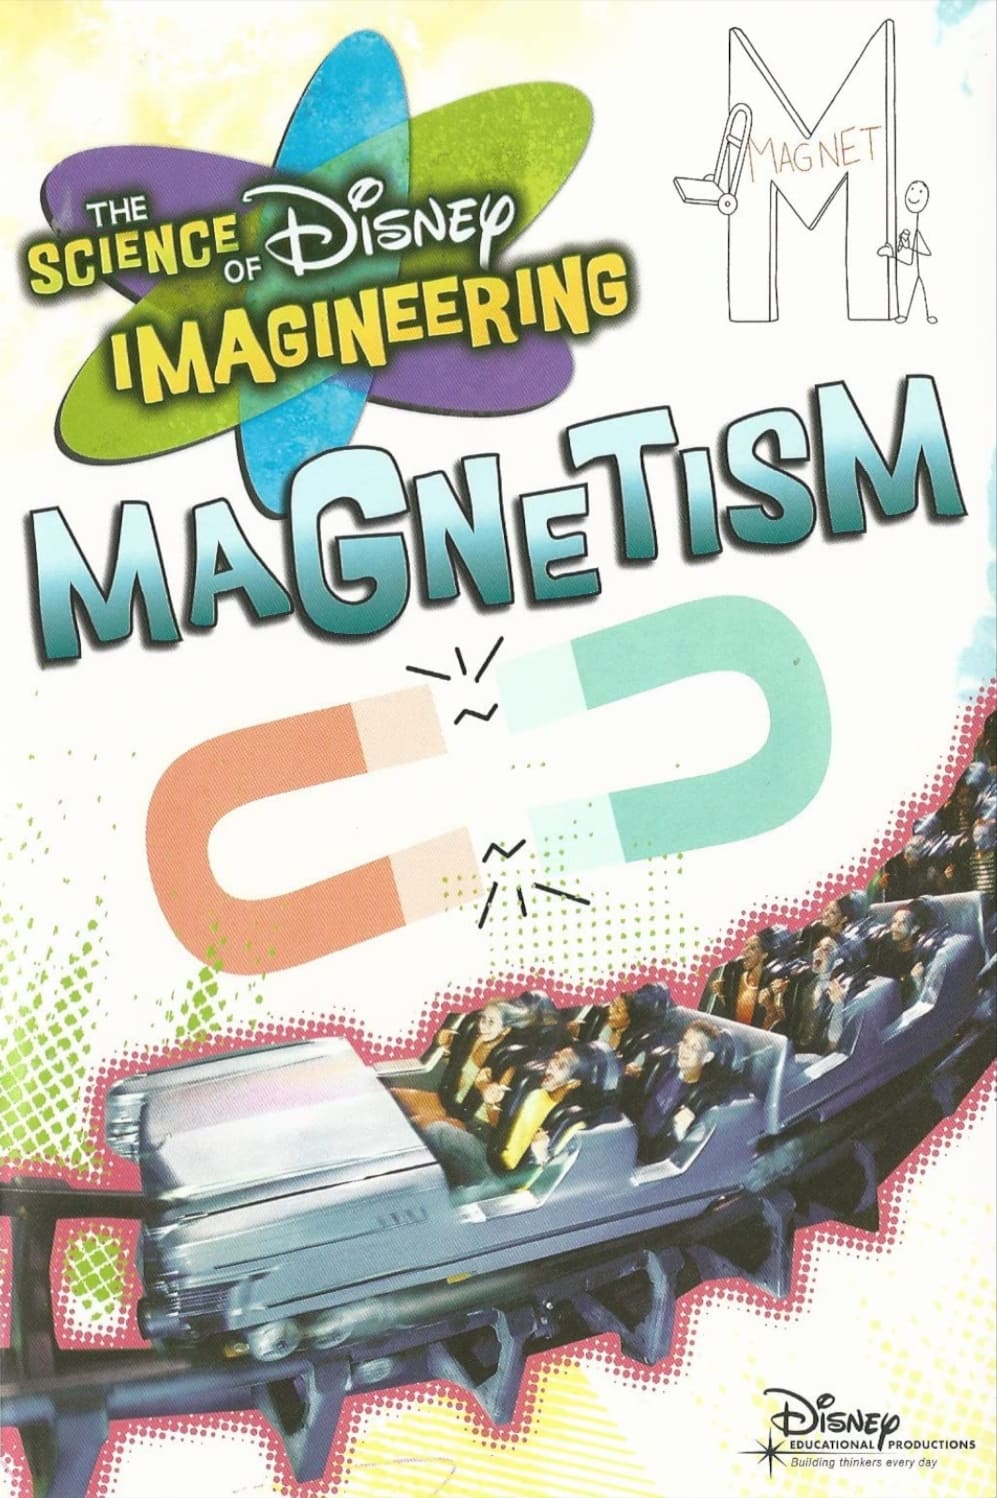 The Science of Disney Imagineering: Magnetism